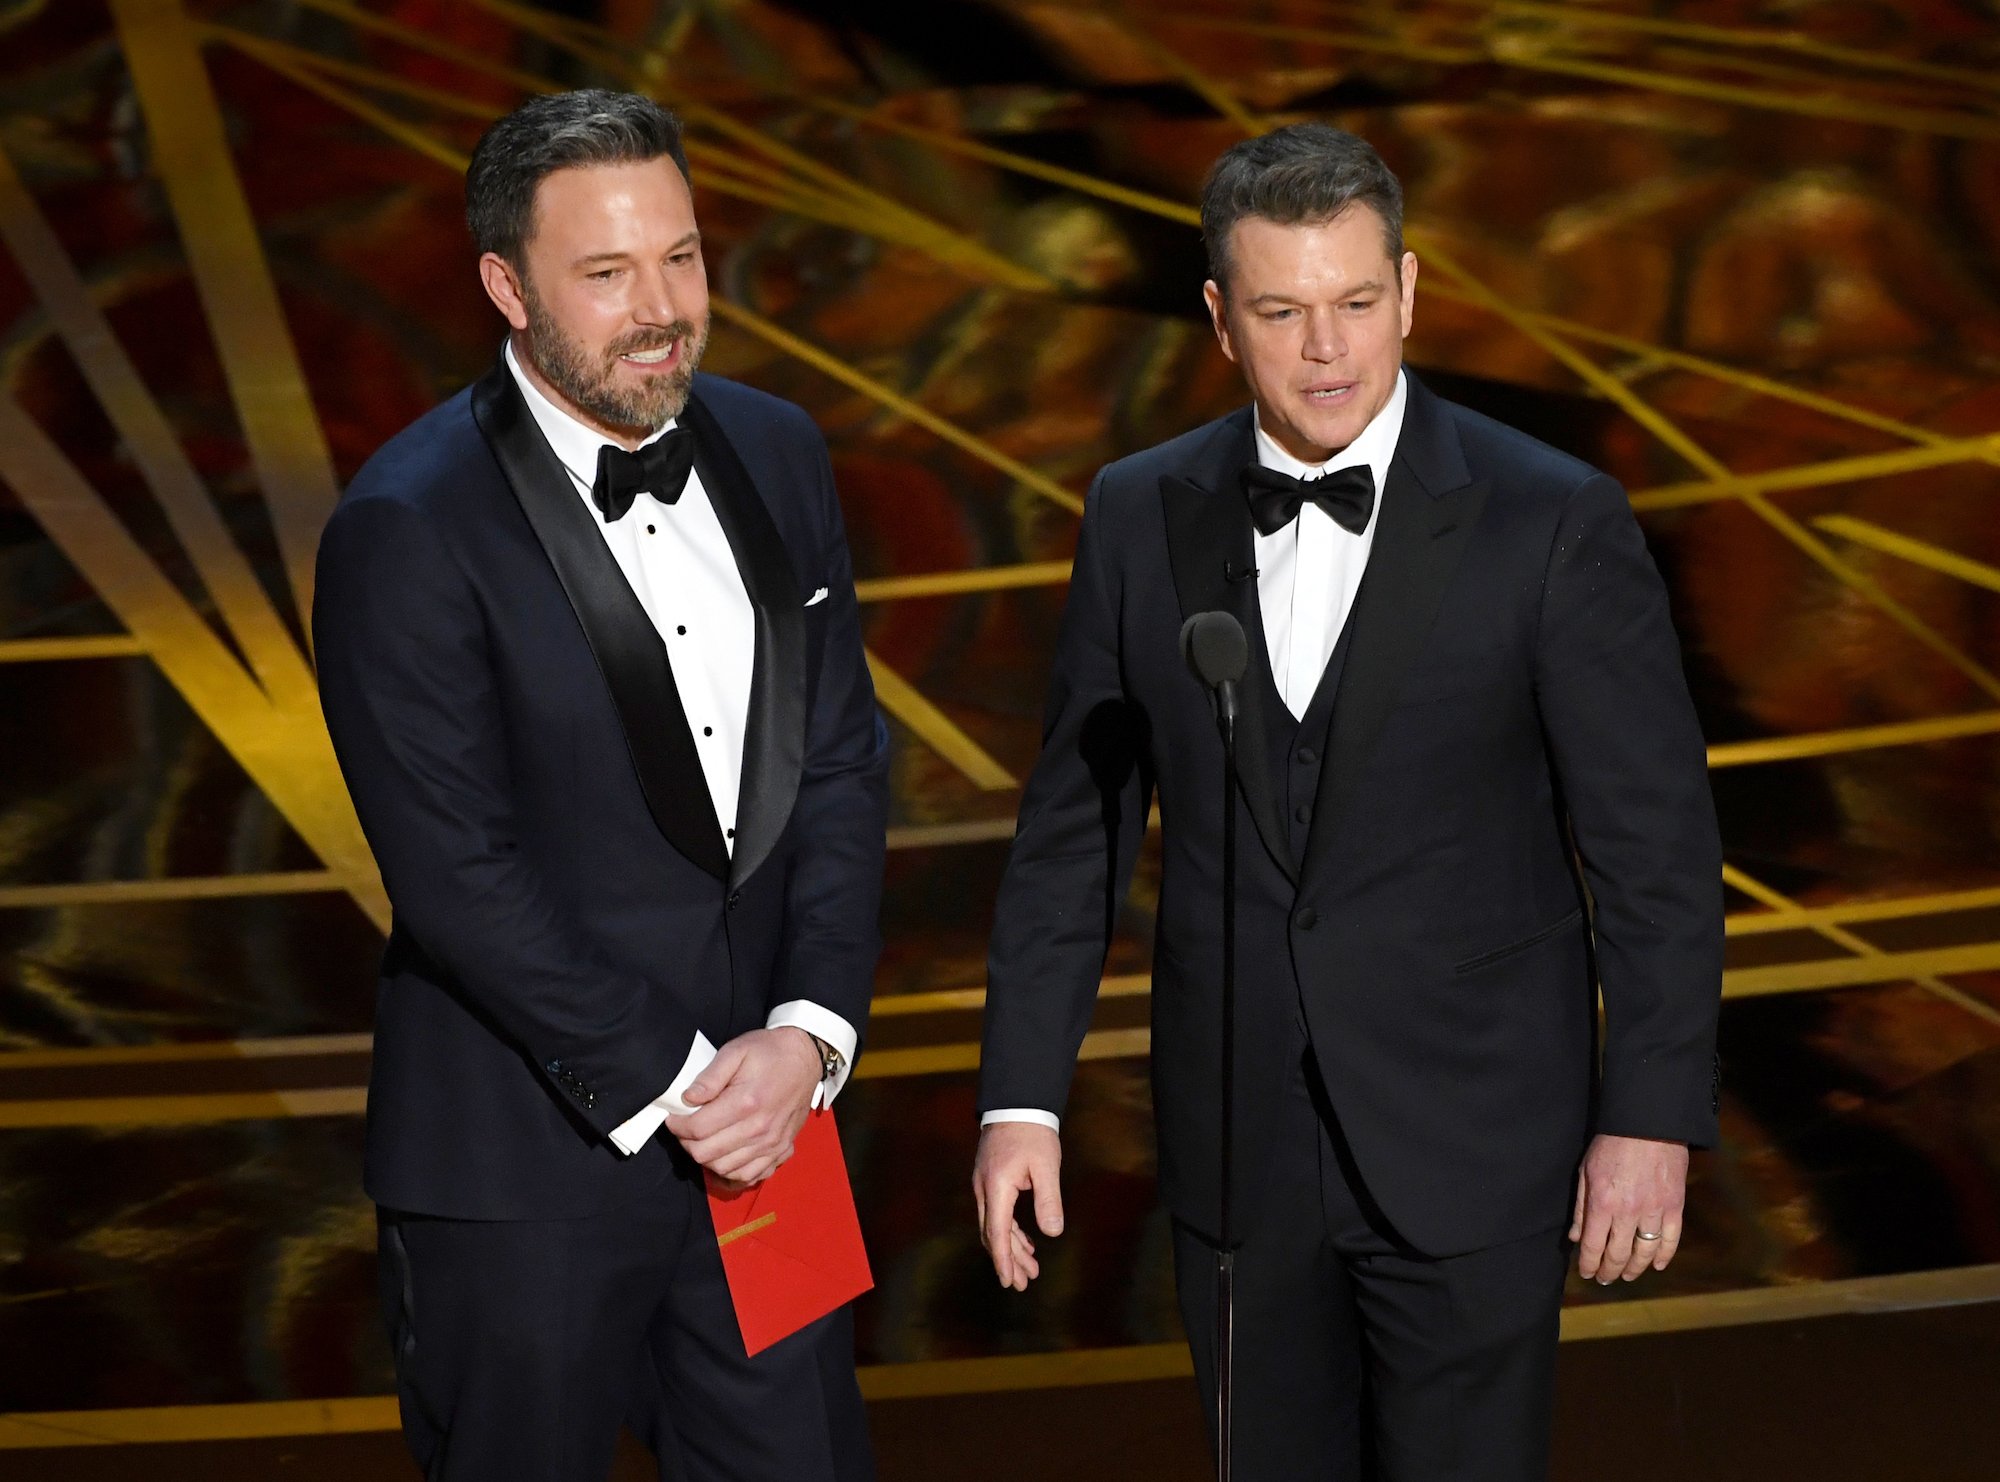 Ben Affleck and Matt Damon present at the Oscars